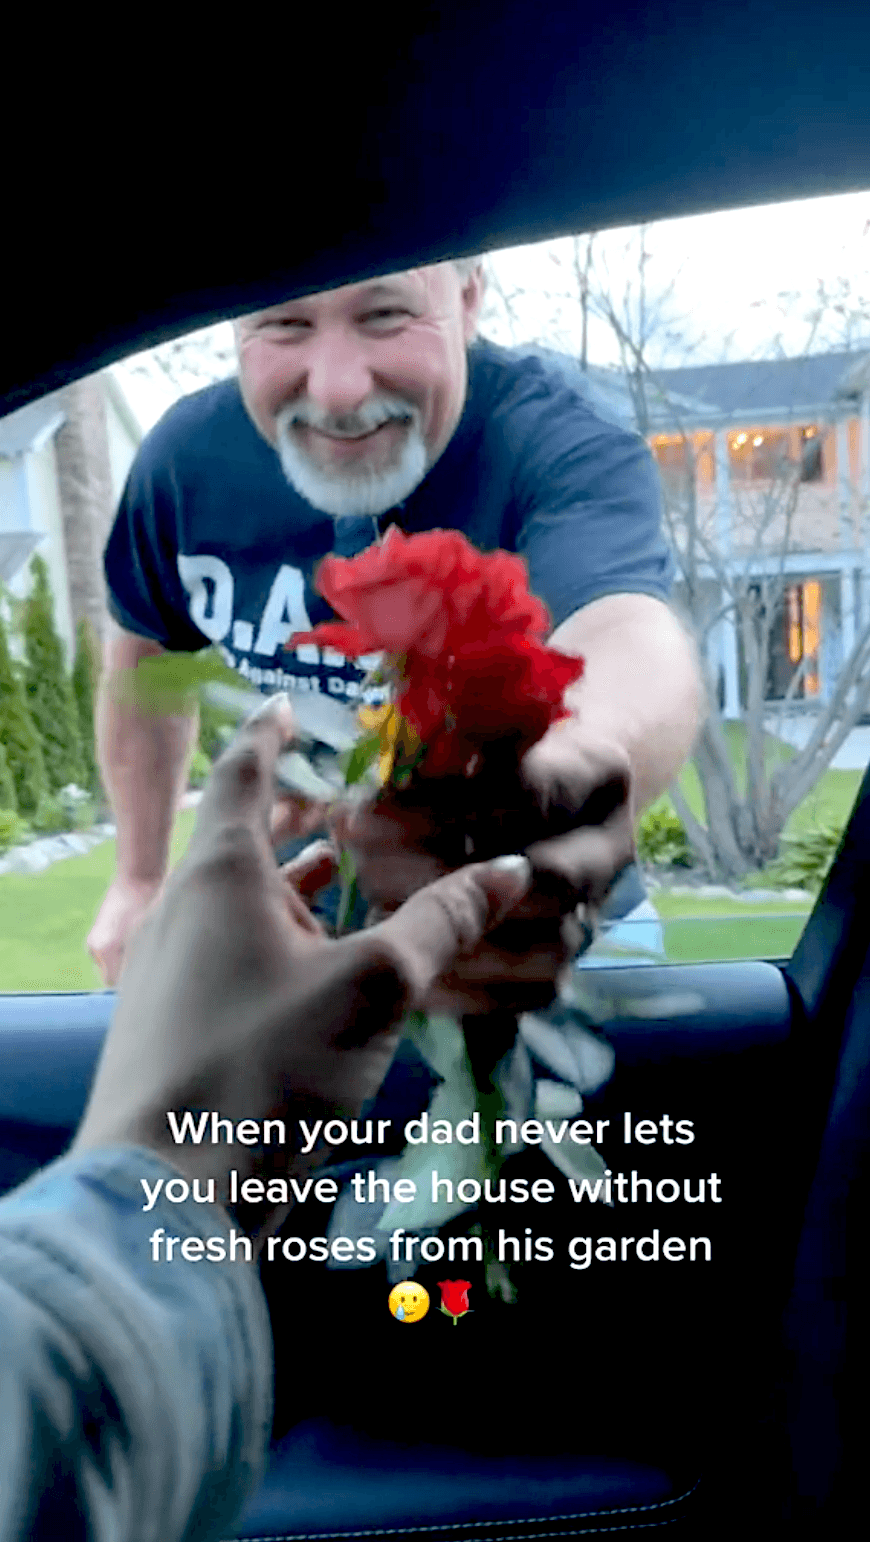 Steve Adams gives Cassi a fresh rose from his garden. (Courtesy of <a href="https://www.instagram.com/cassiadams_/">Cassi Adams</a>)